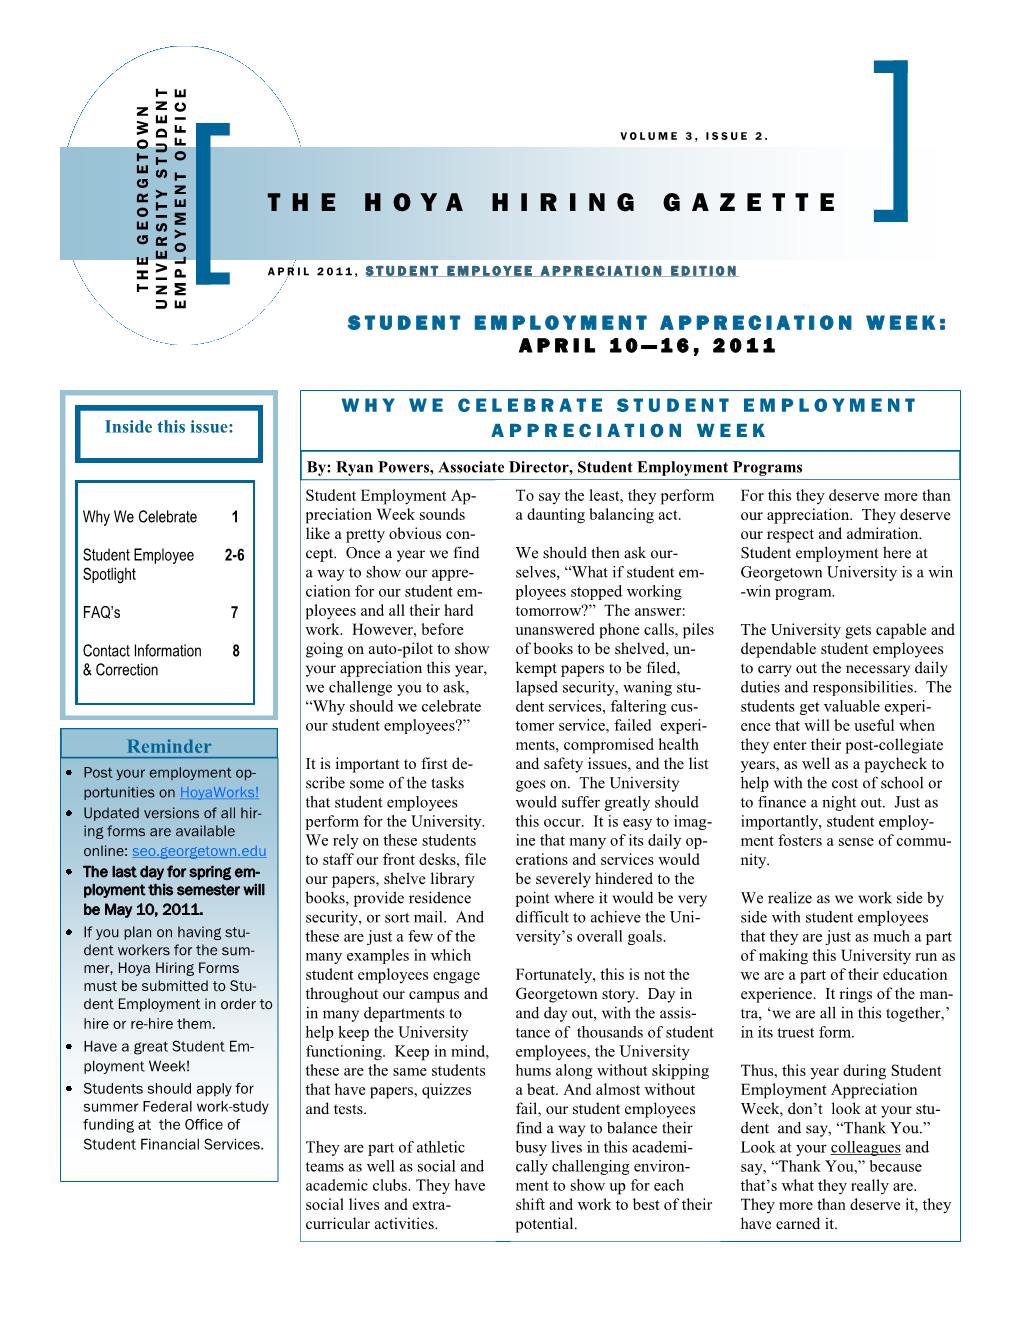 The Hoya Hiring Gazette